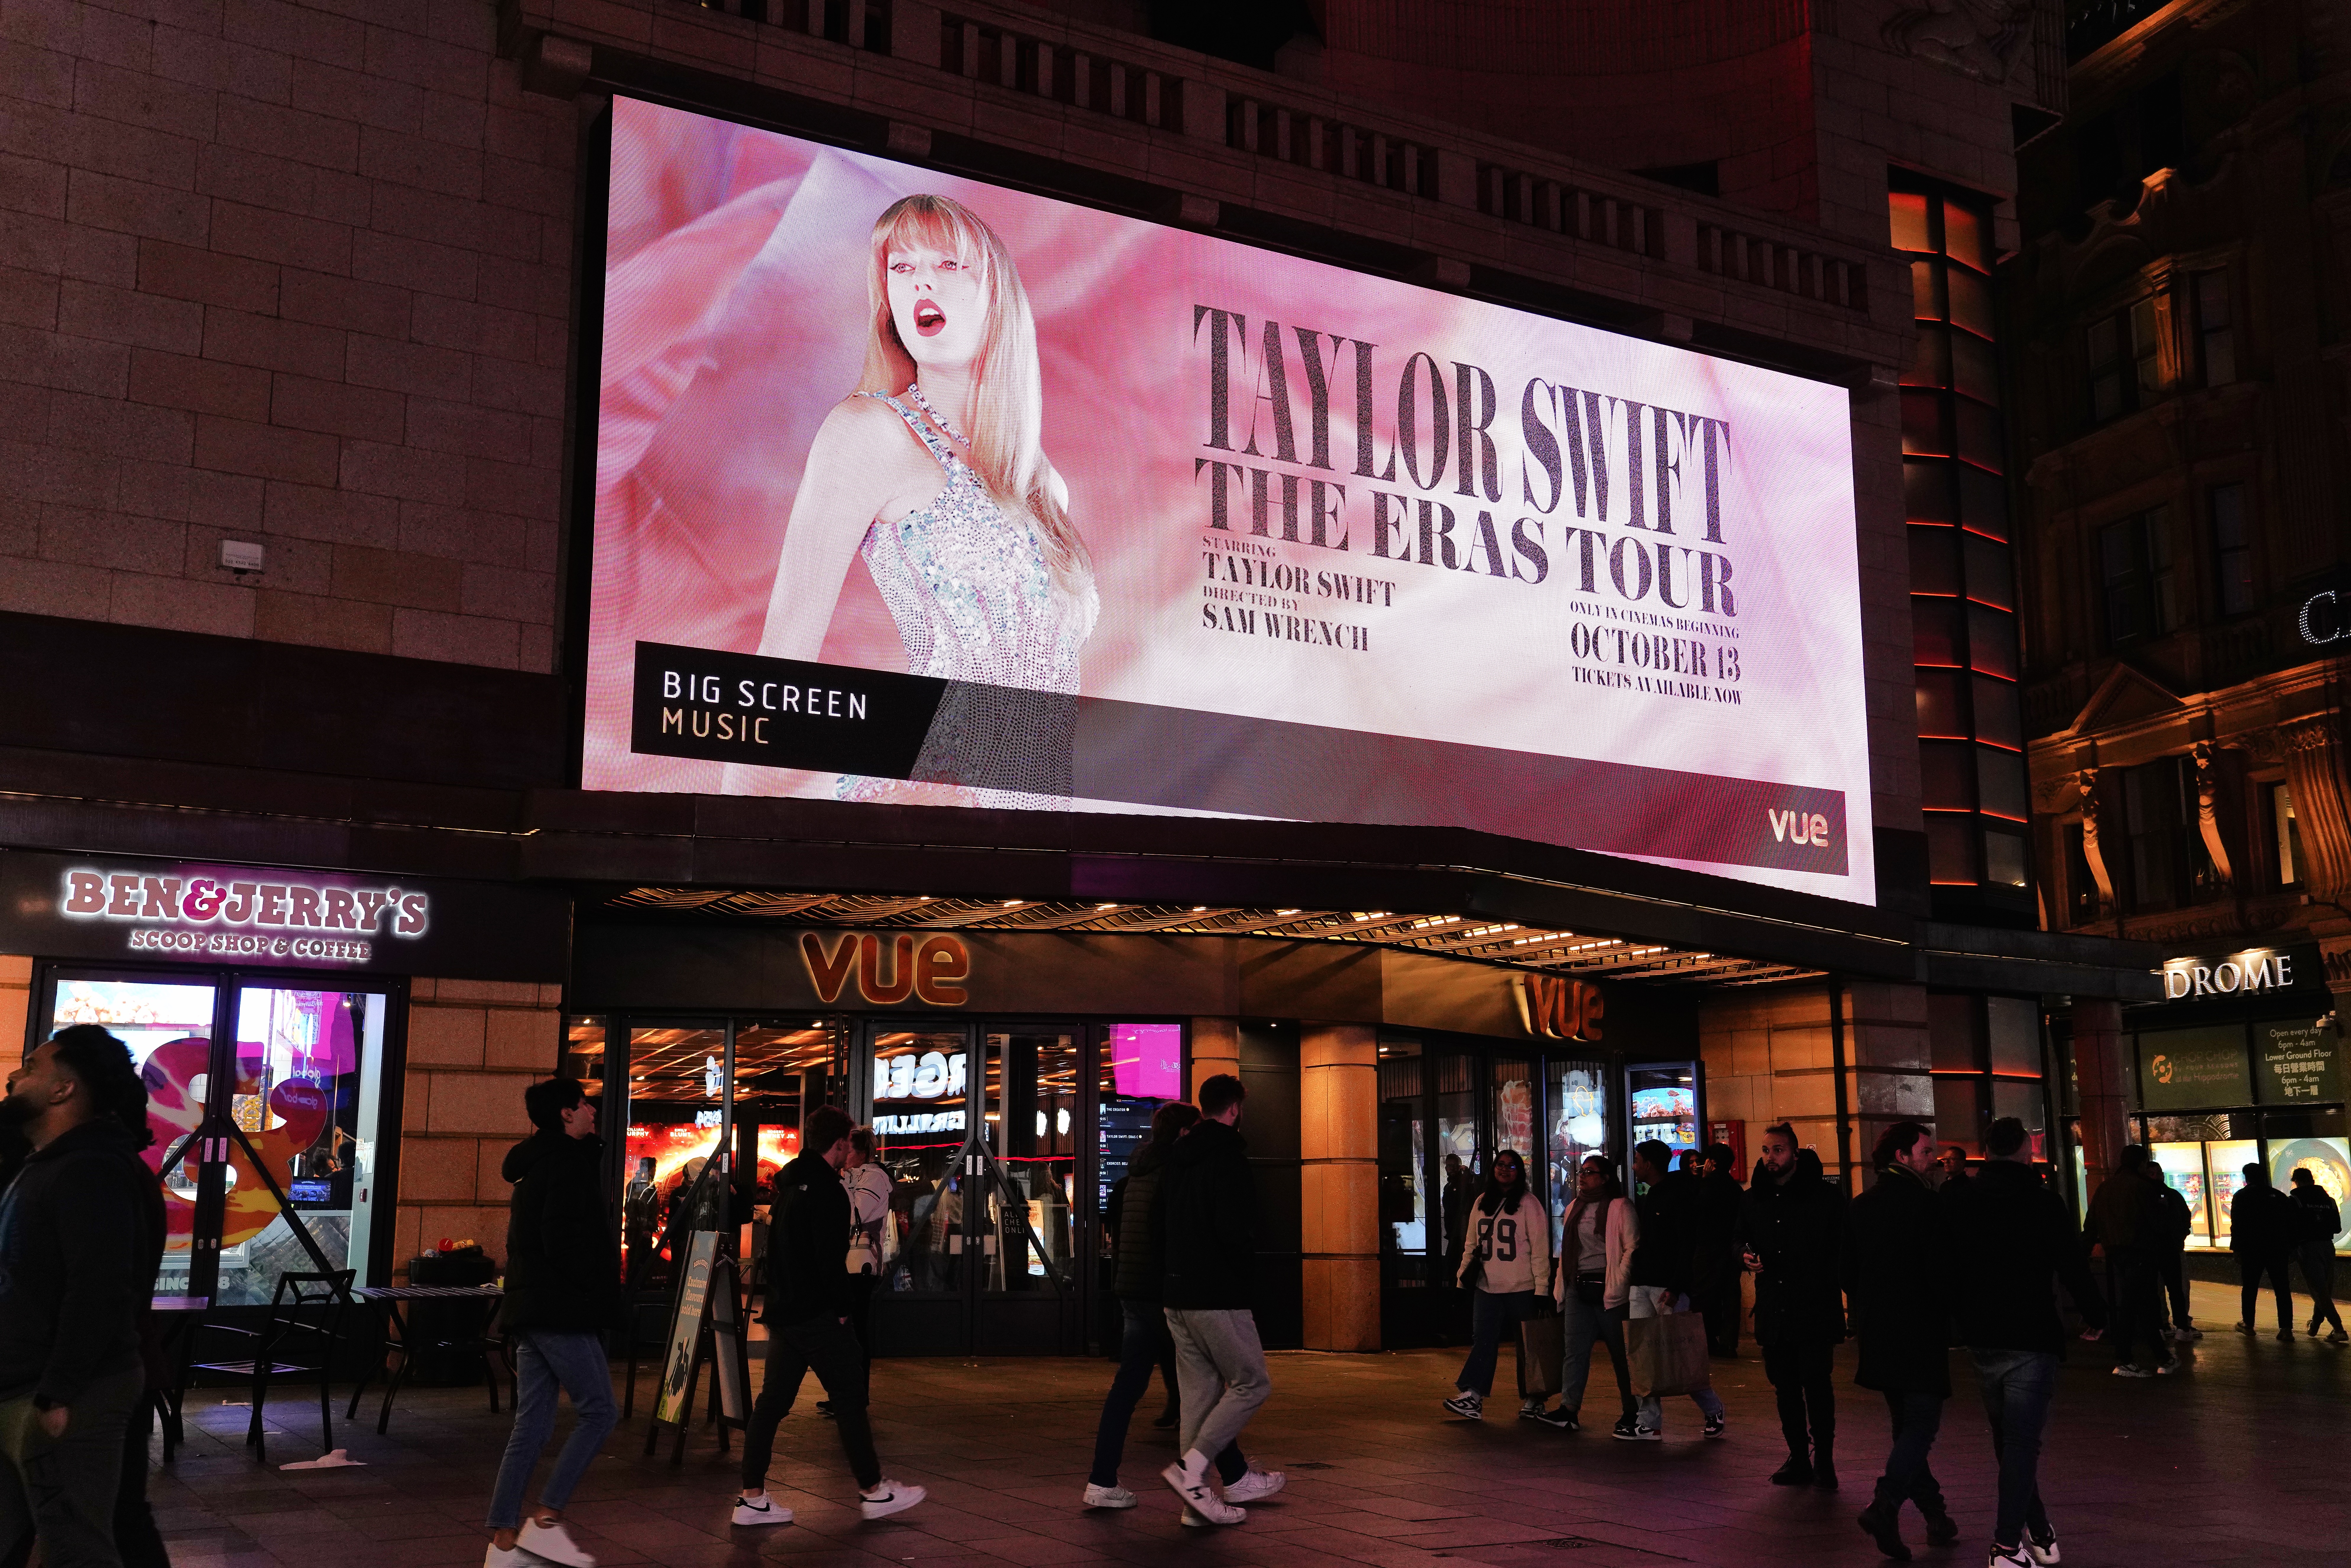 Taylor Swift Eras Tour ad